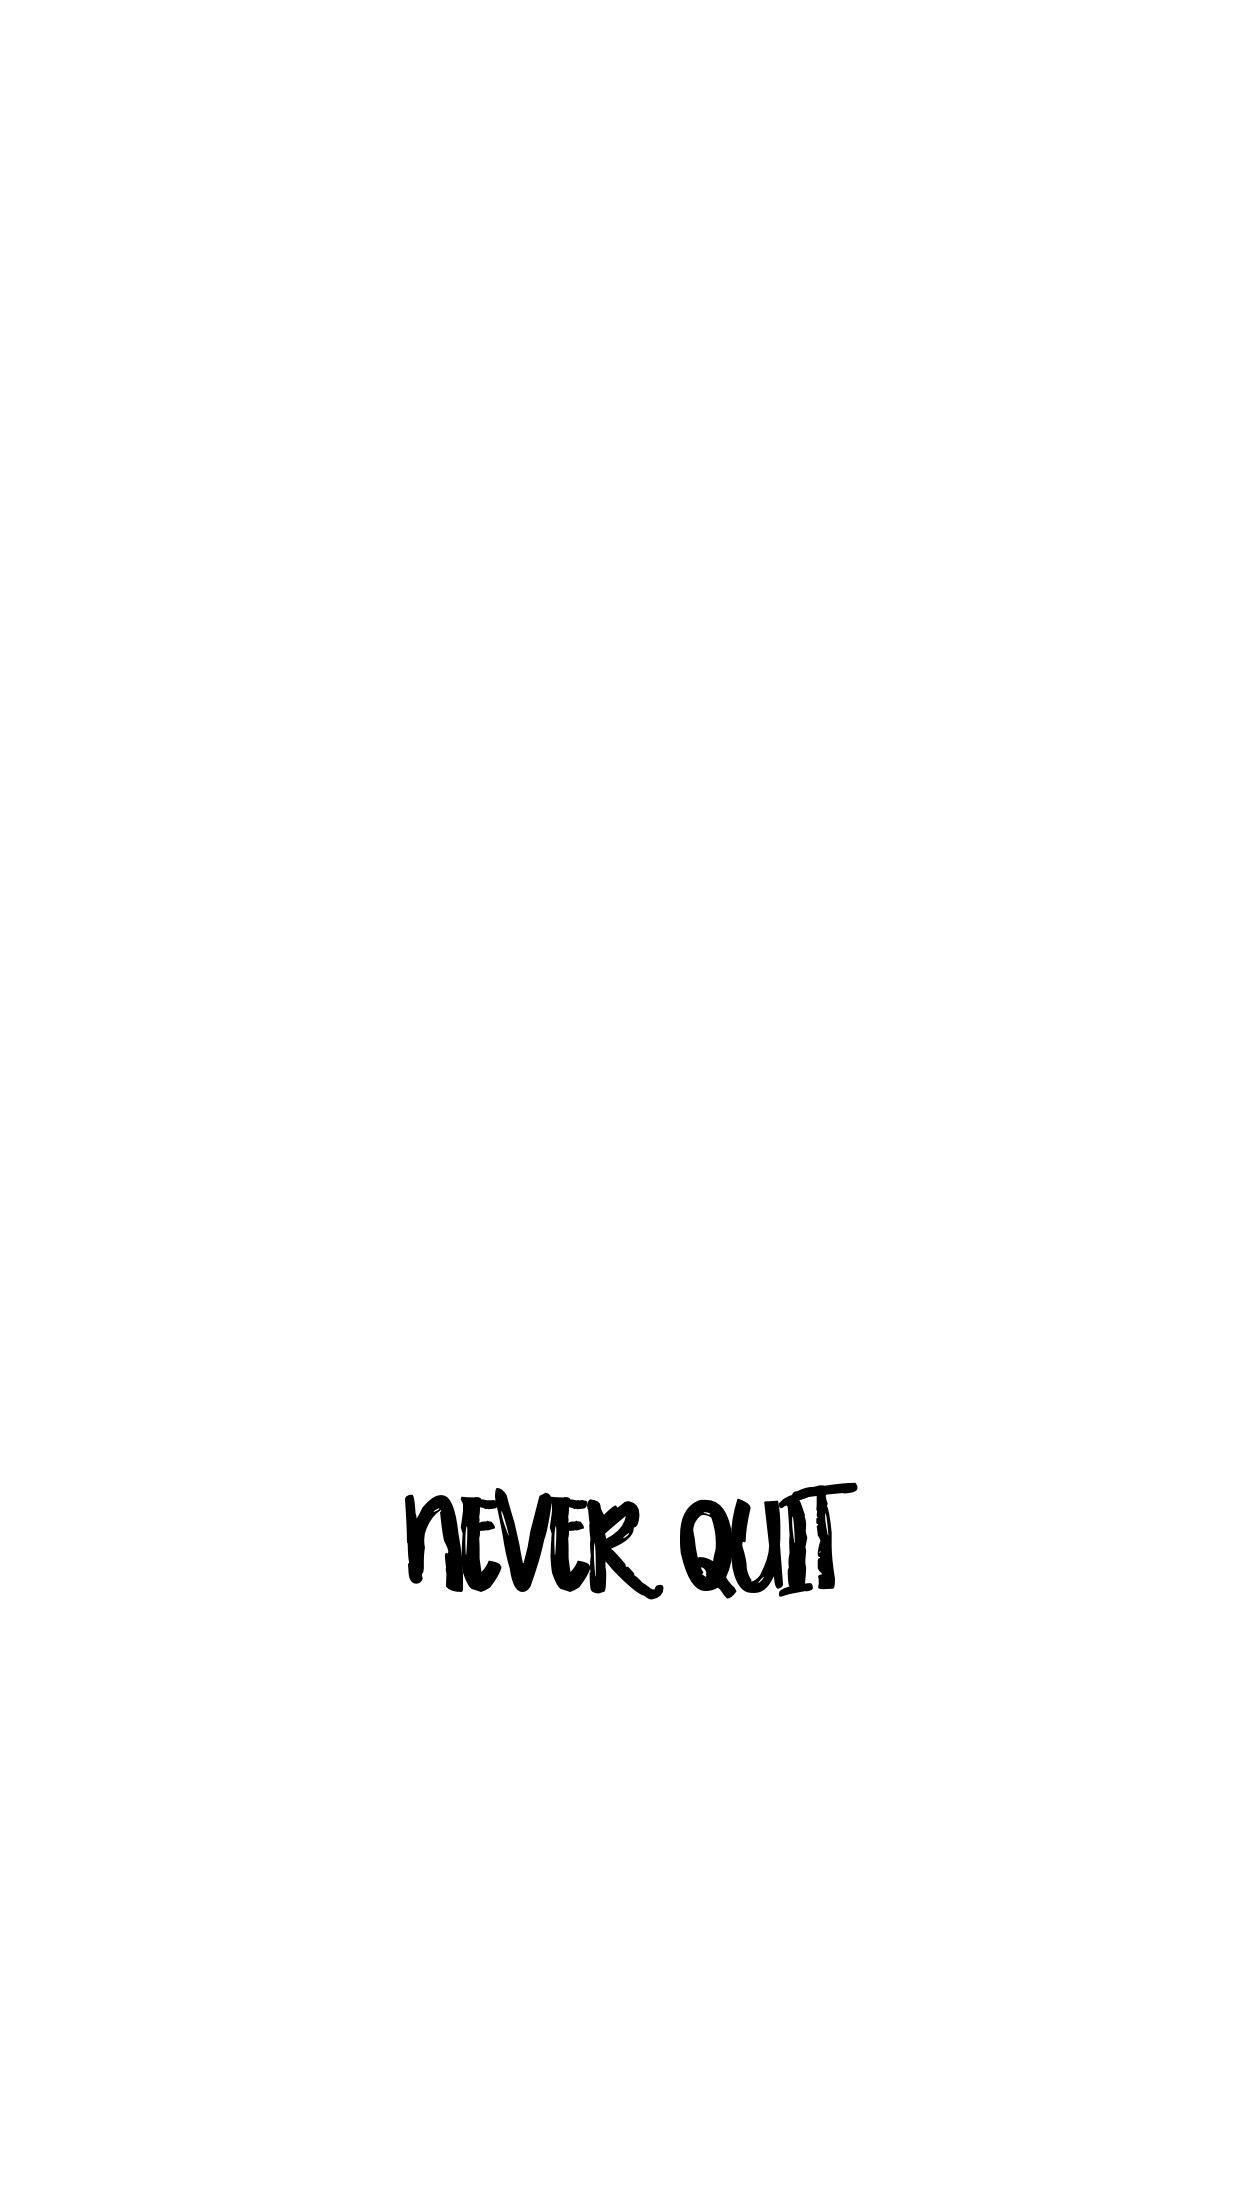 game quitter wallpaper